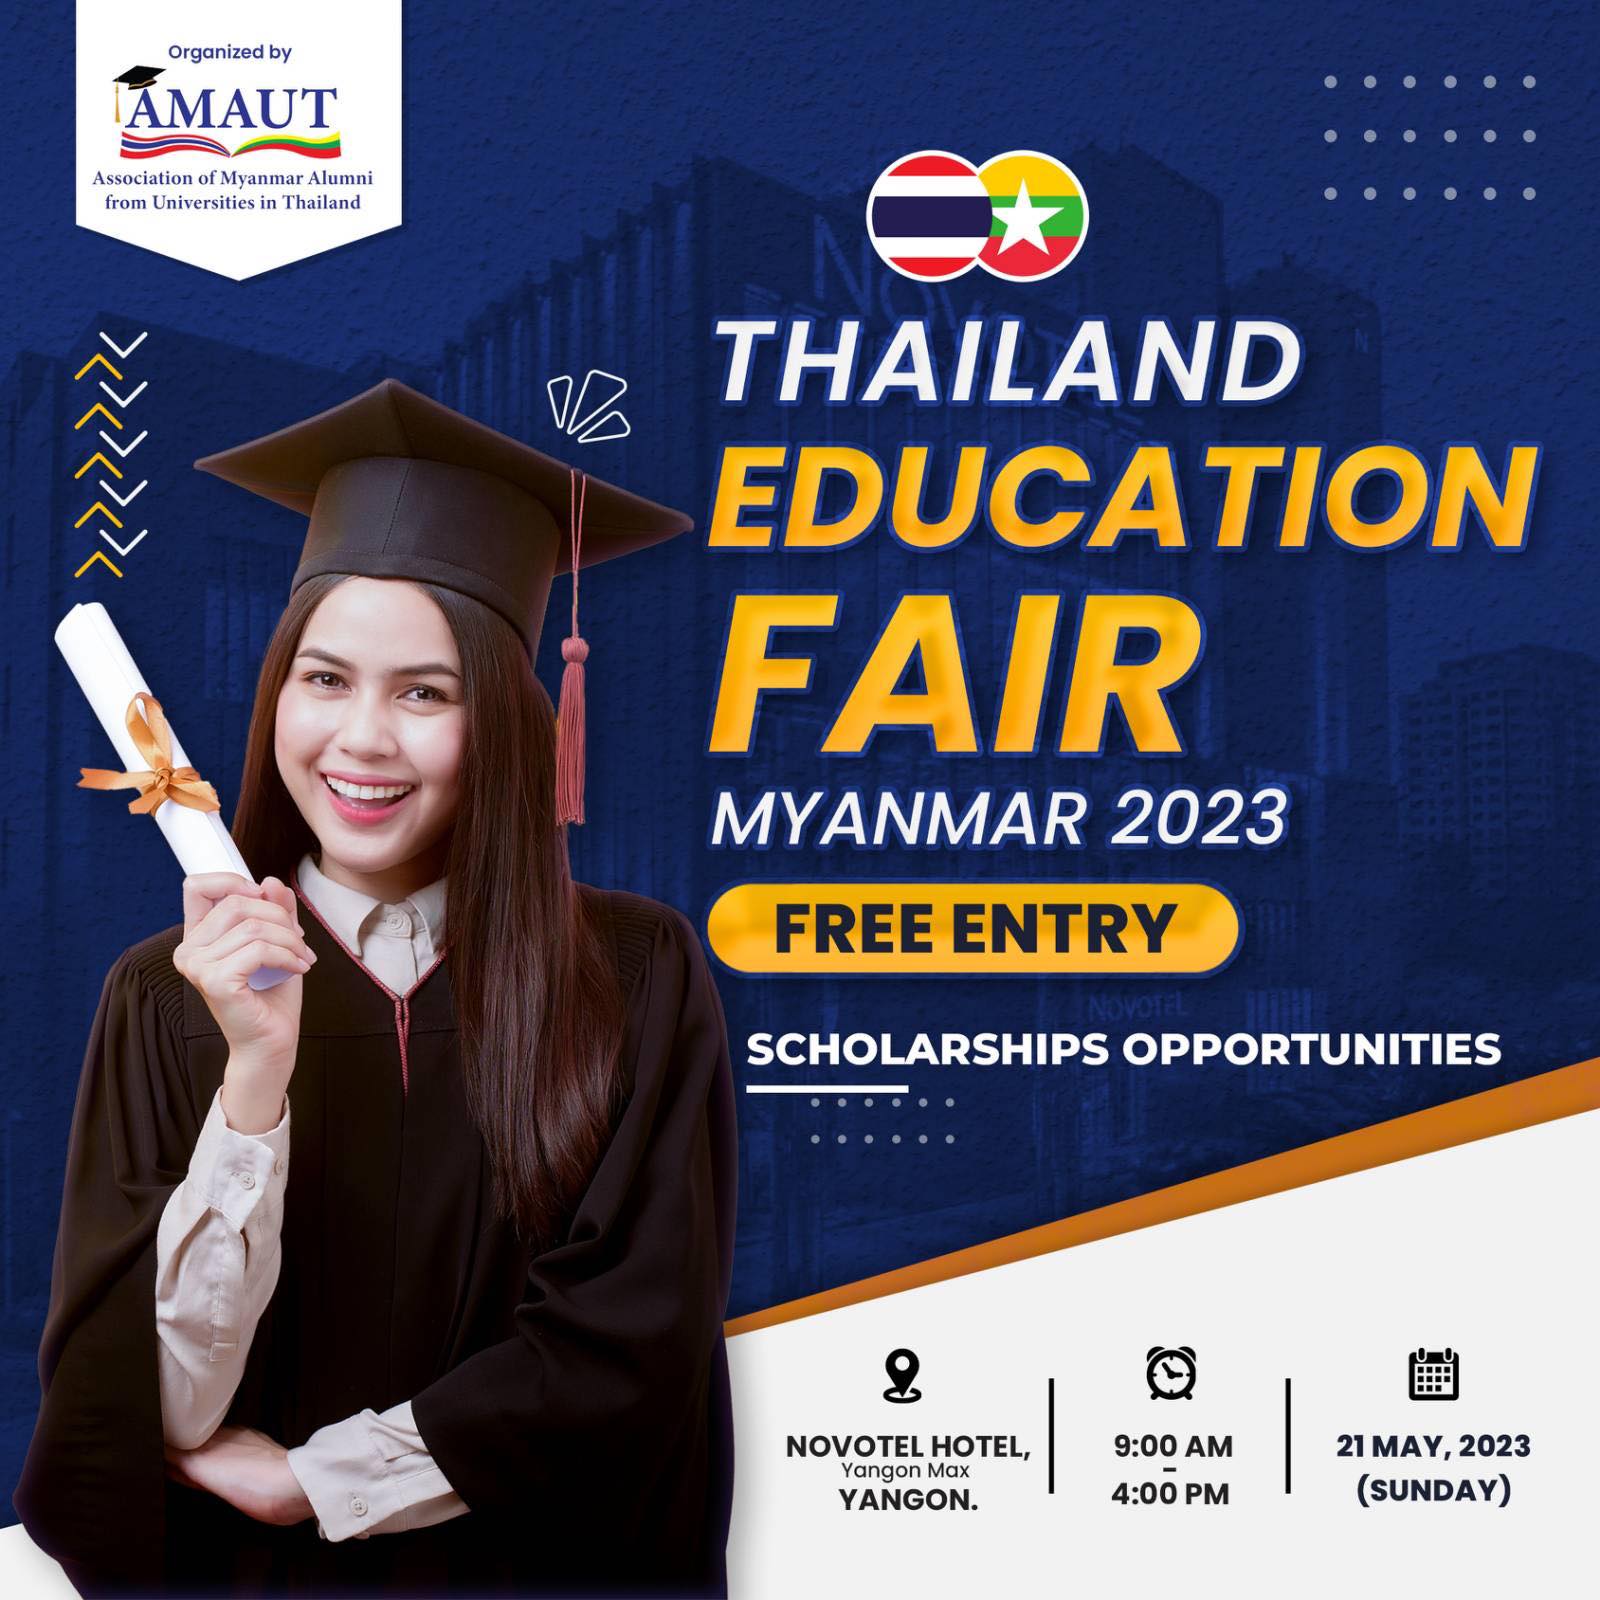 Thailand Education Fair (Myanmar) 2023 proposal